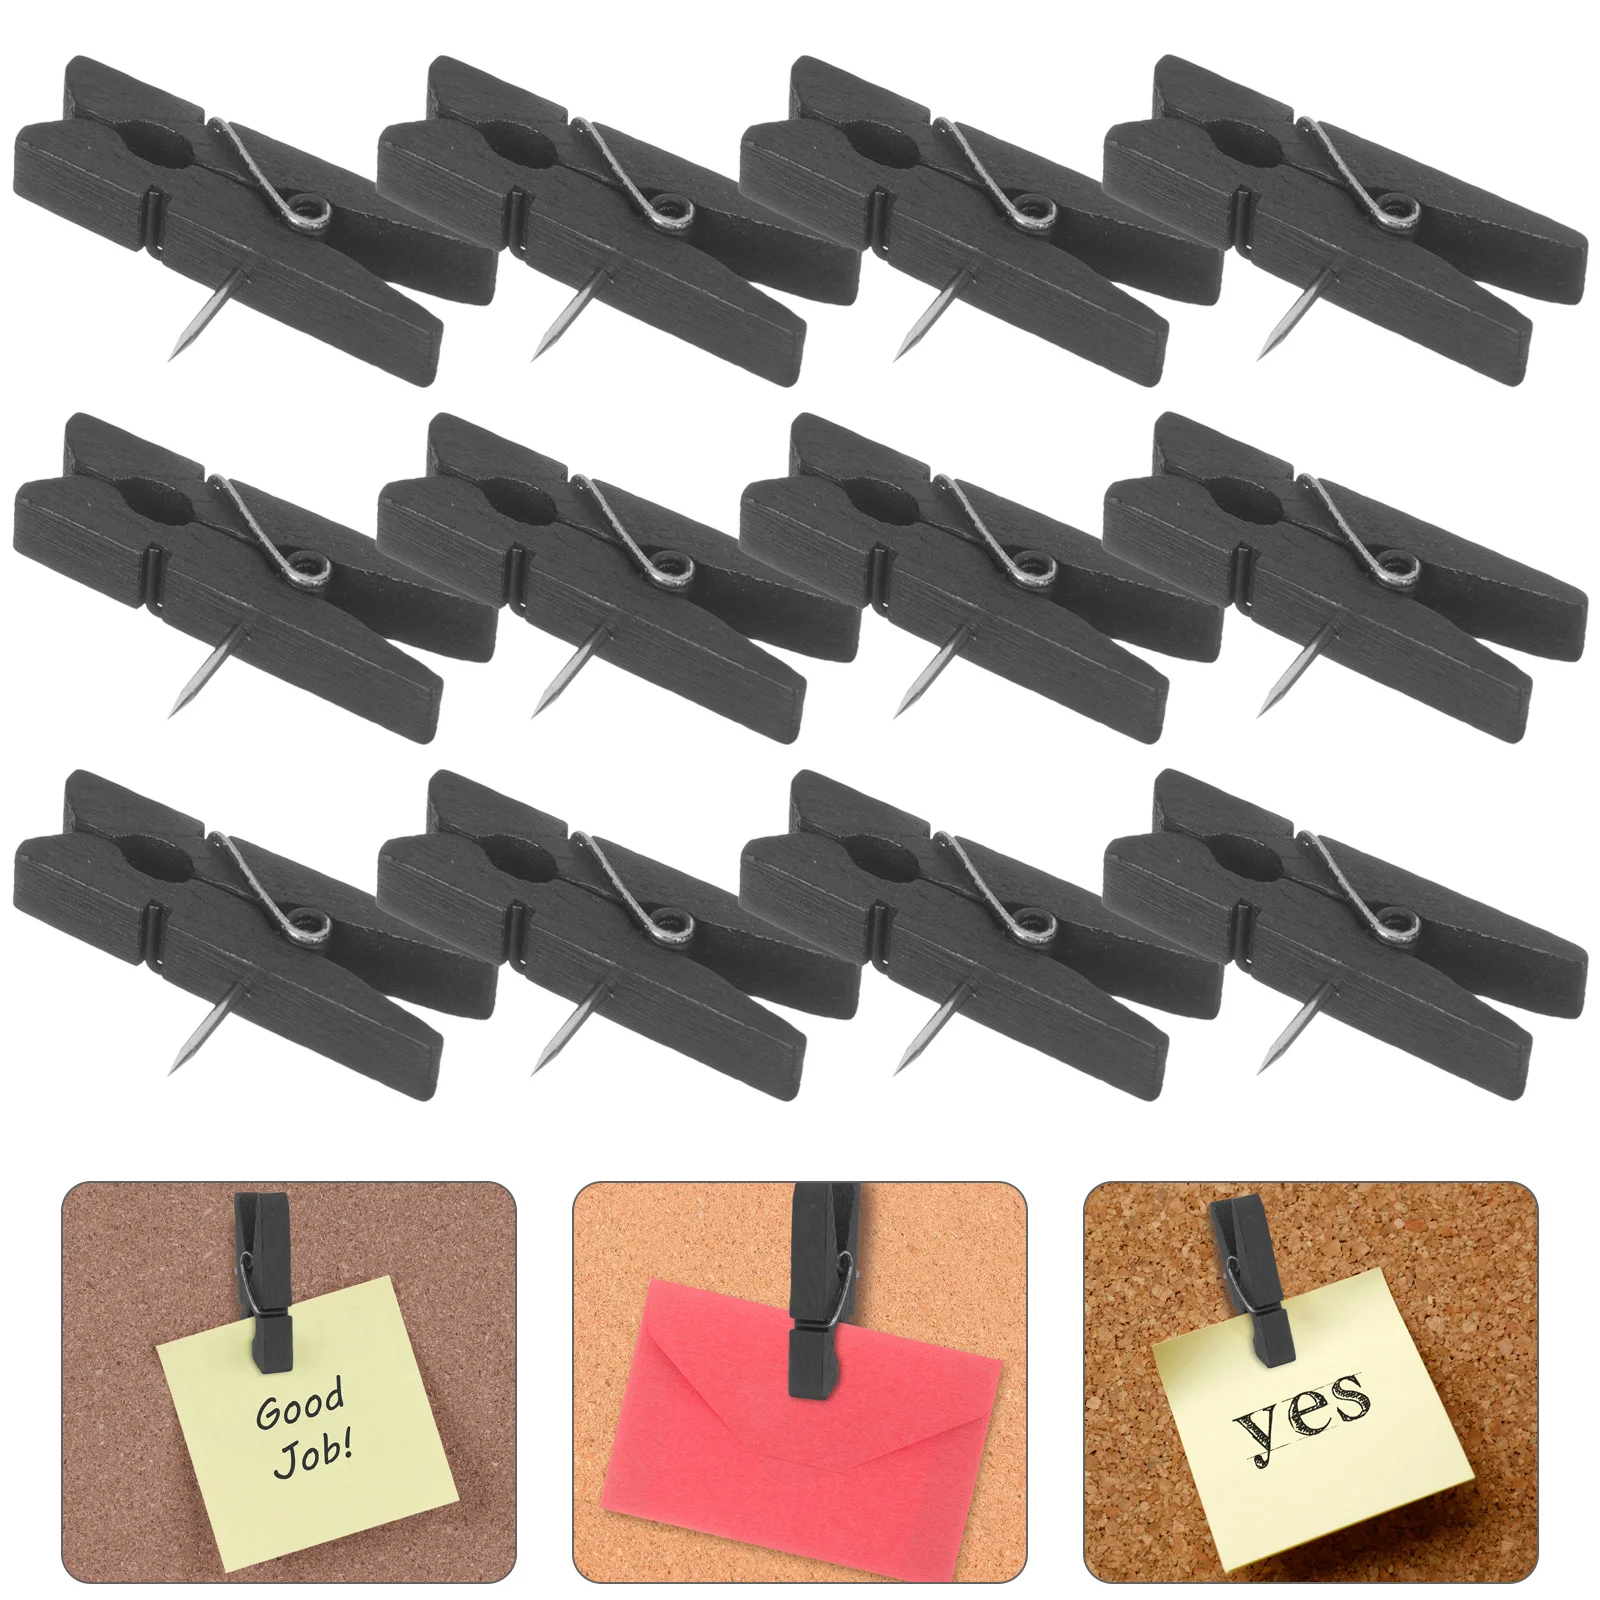 

50 Pcs Thumbtack Clip Craft Pegs Clips Photo Fixing Clamp Multipurpose Pushpin Pins Wooden Metal Decorative Thumbtacks